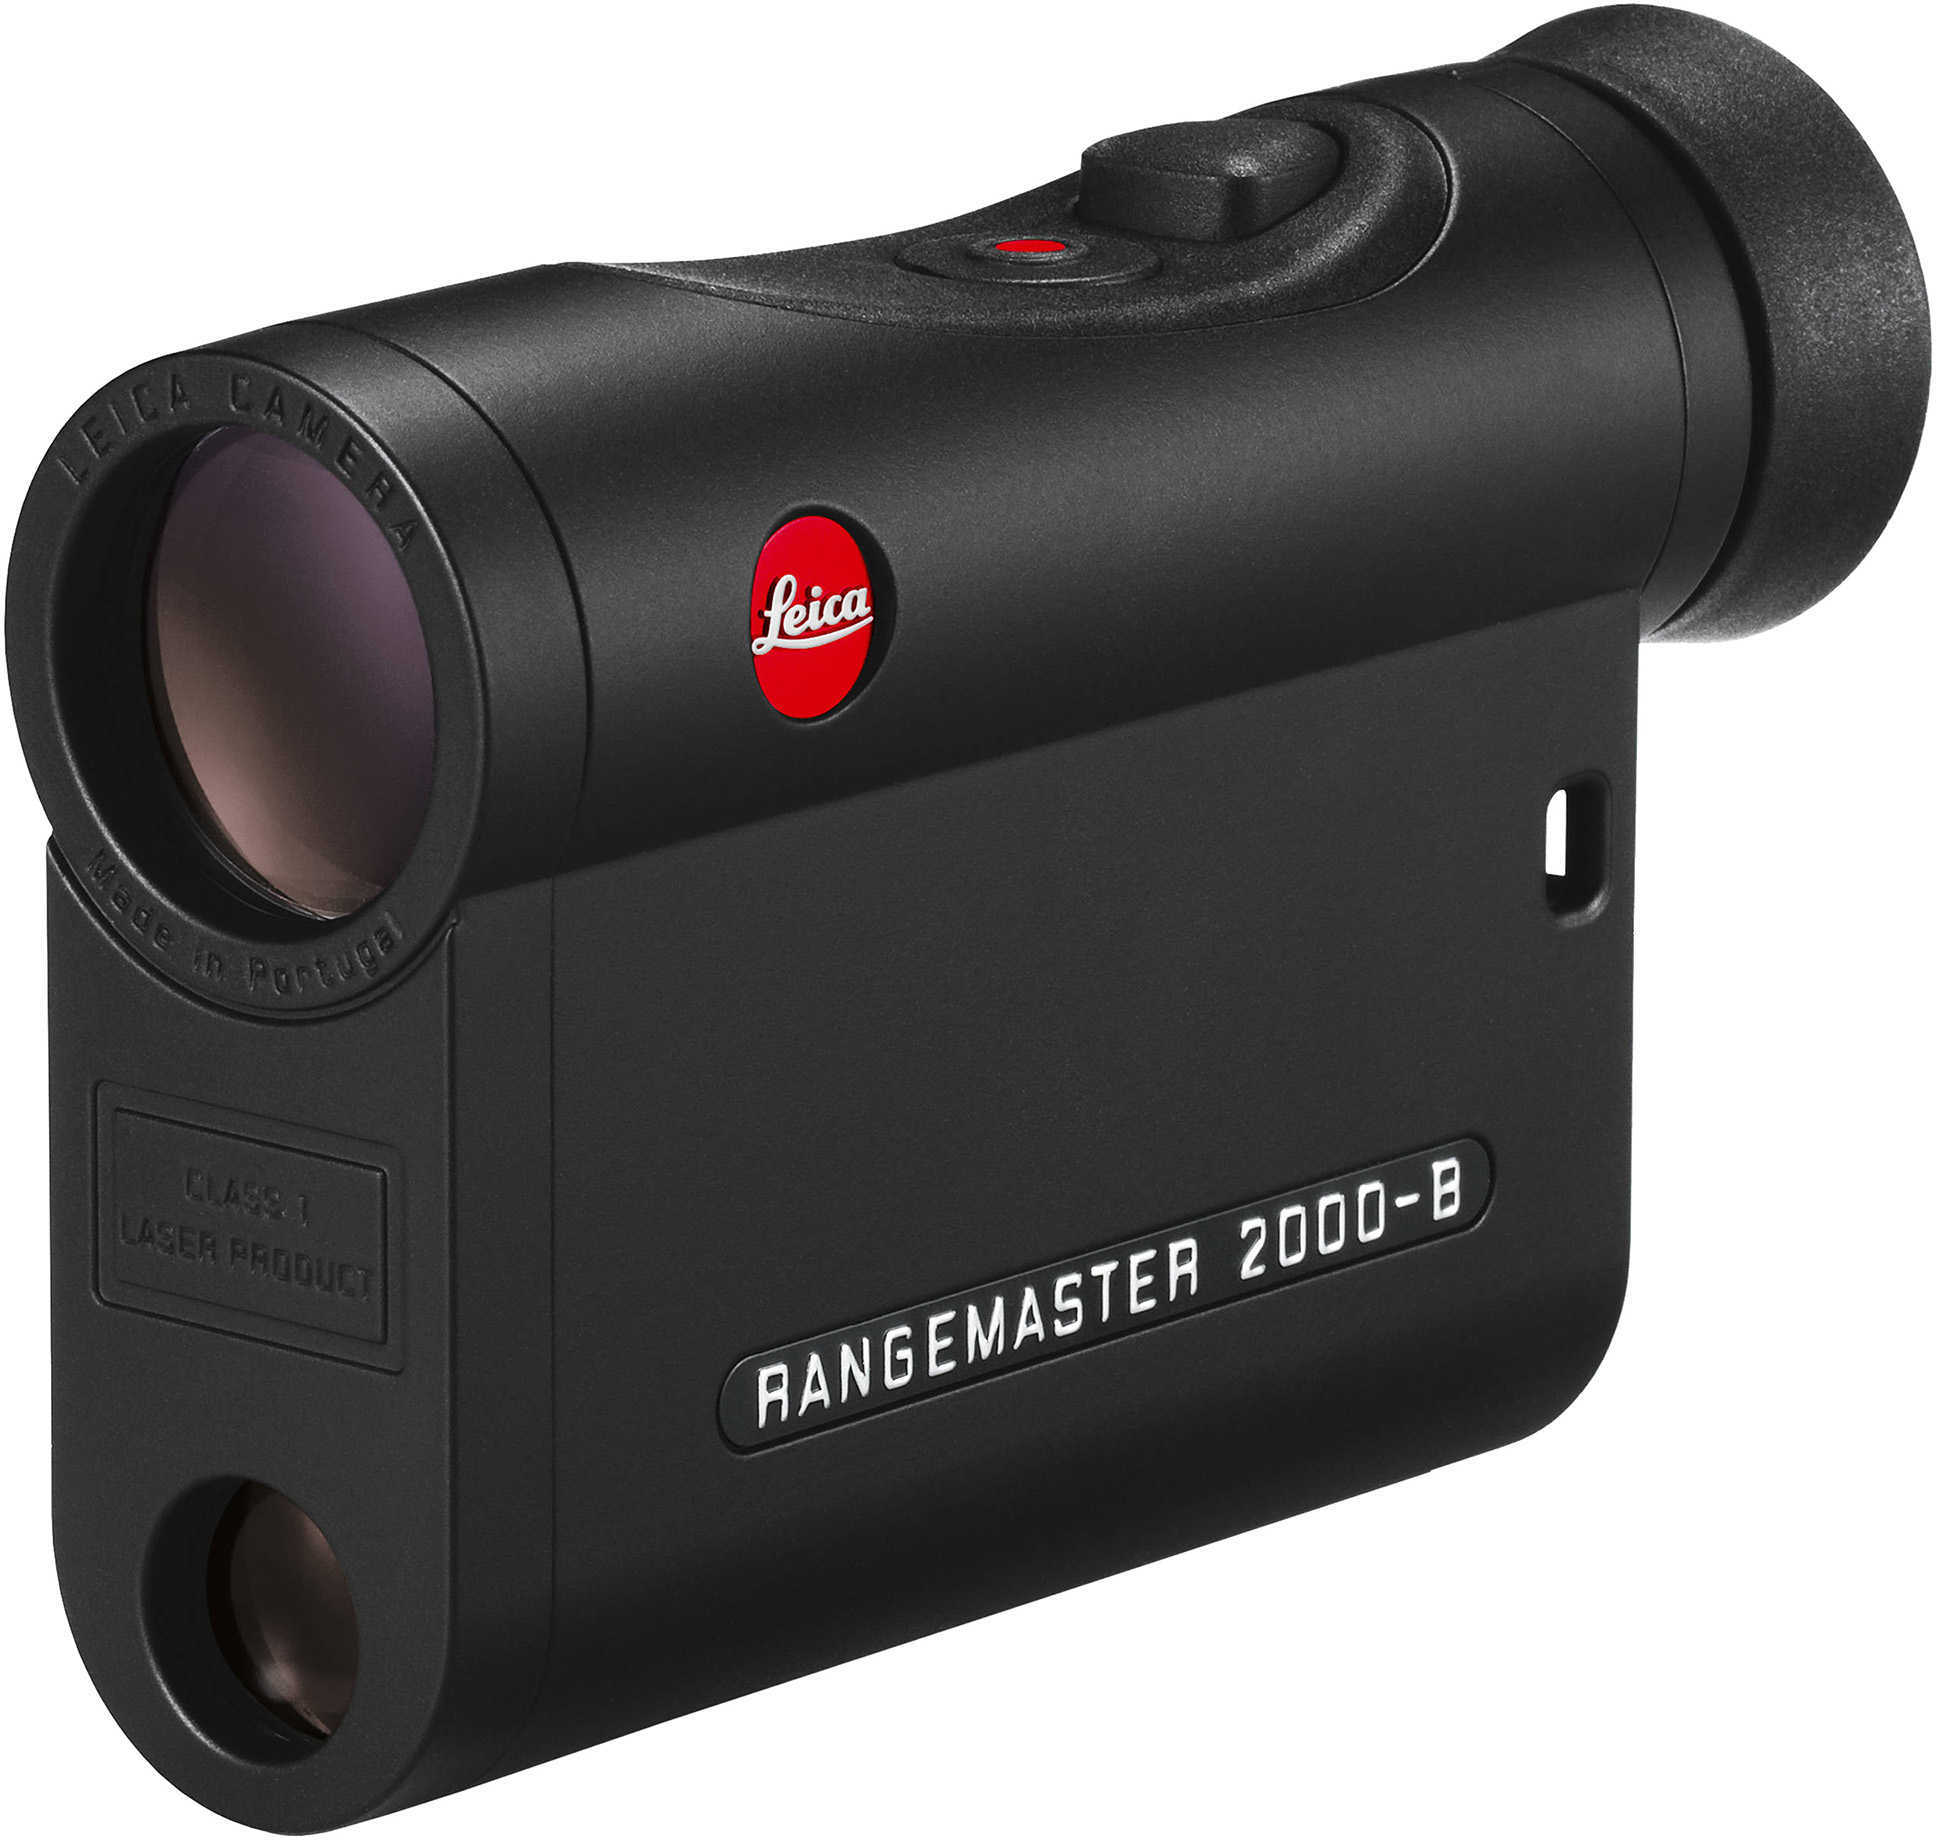 Leica Camera AG Sport Optics Rangemaster Laser Rangefinder CRF 2000-B 7x Black Md: 40536